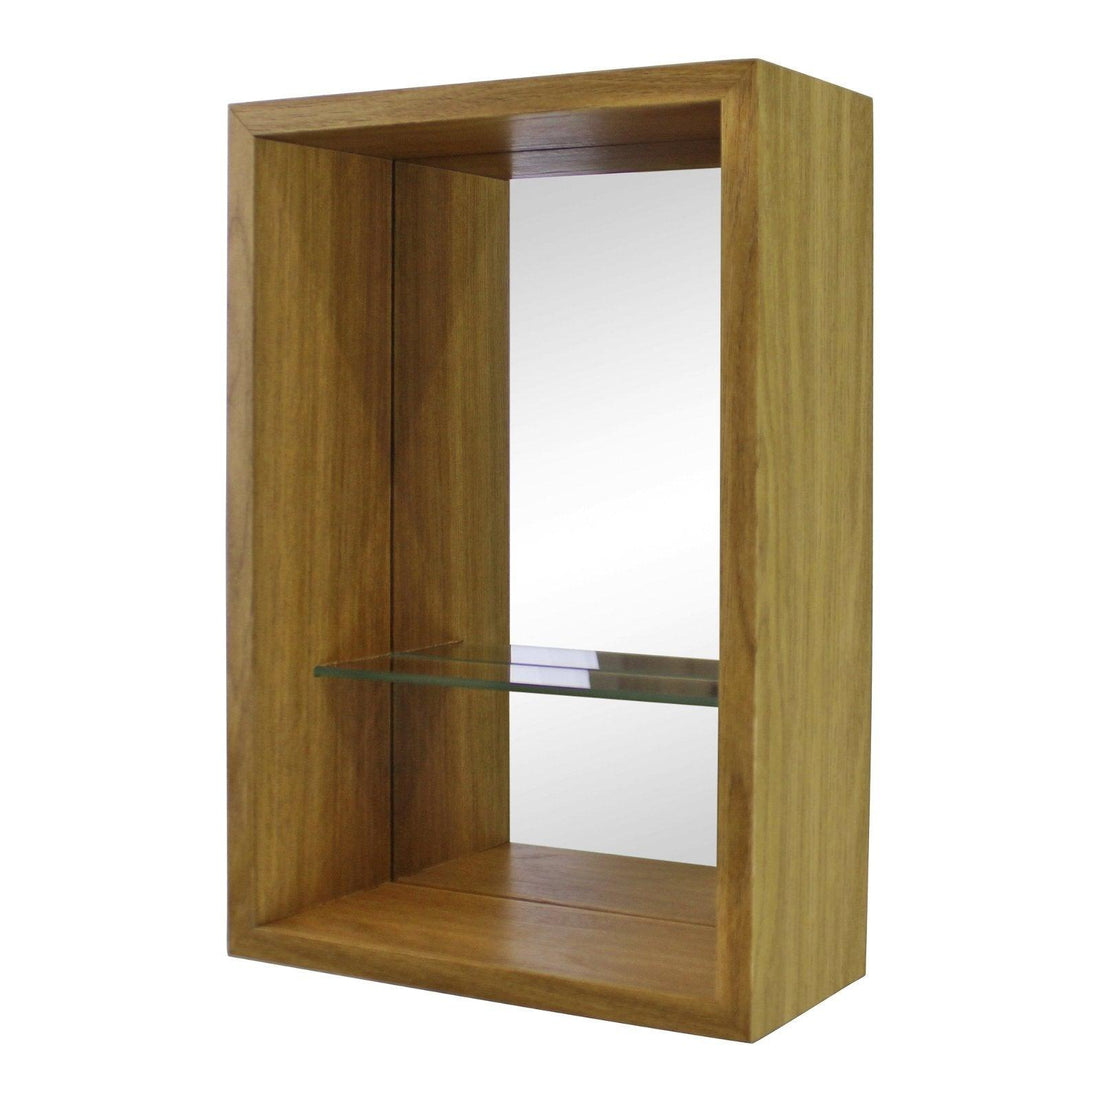 Small Veneered Mirror Shelf Unit, 31x21cm - £20.99 - Wall Hanging Shelving 